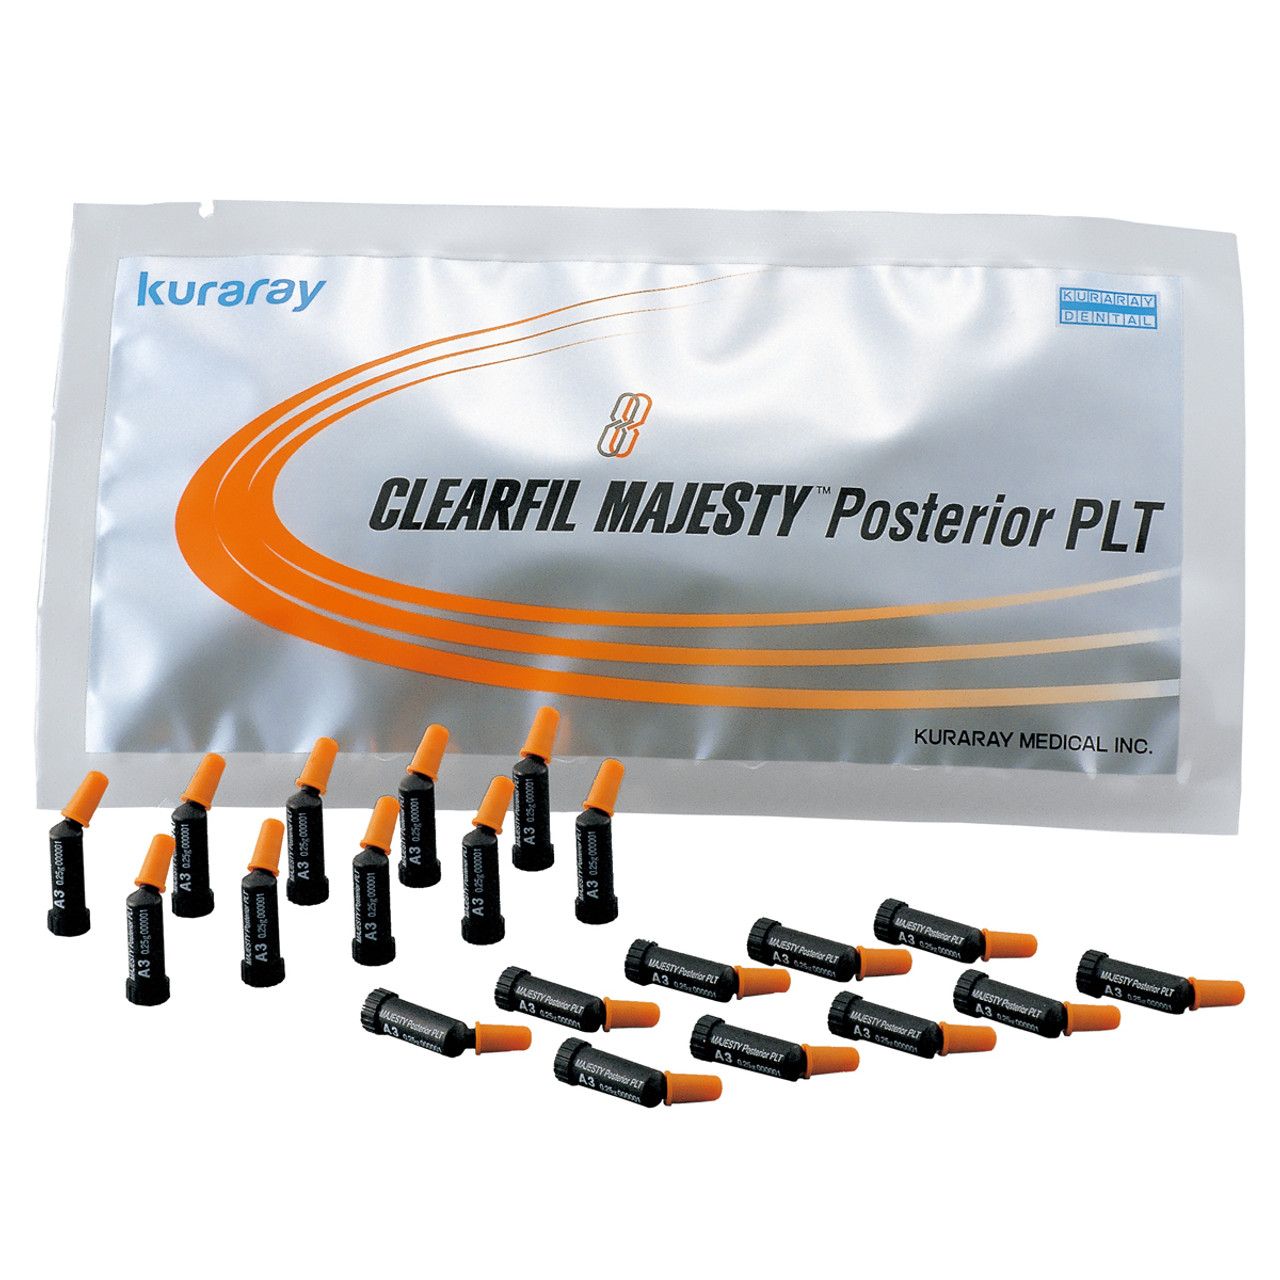 Kuraray - Clearfil Majesty Posterior PLT Tip - A2